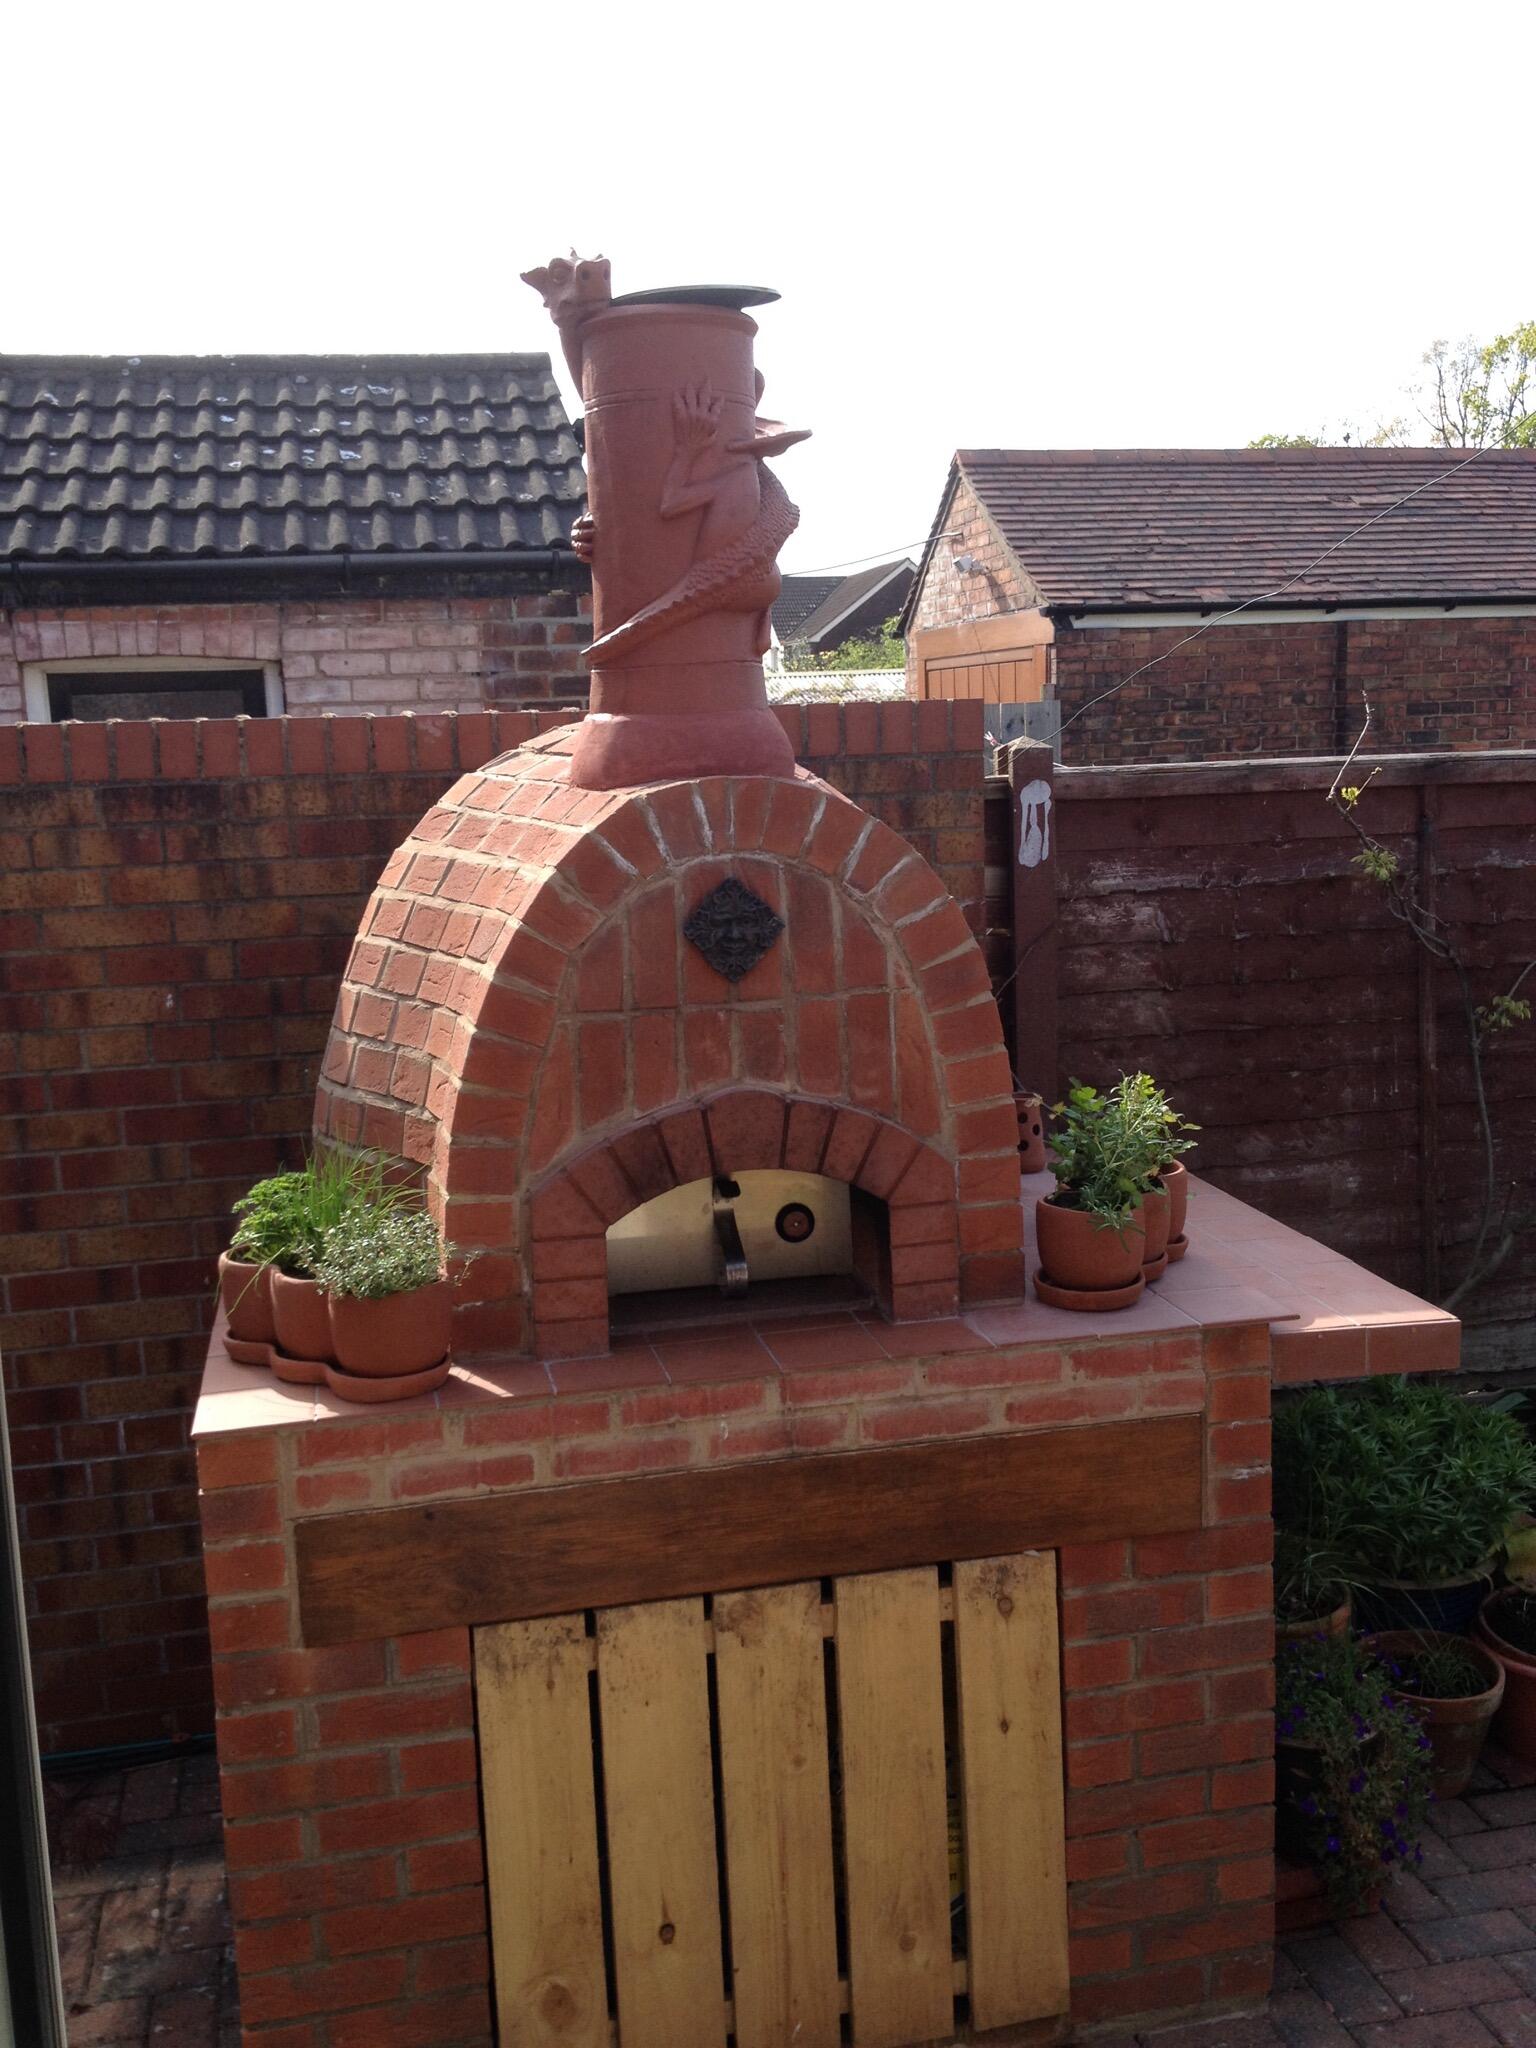 Terracotta dragon chimney pot installed on a brick built pizza oven